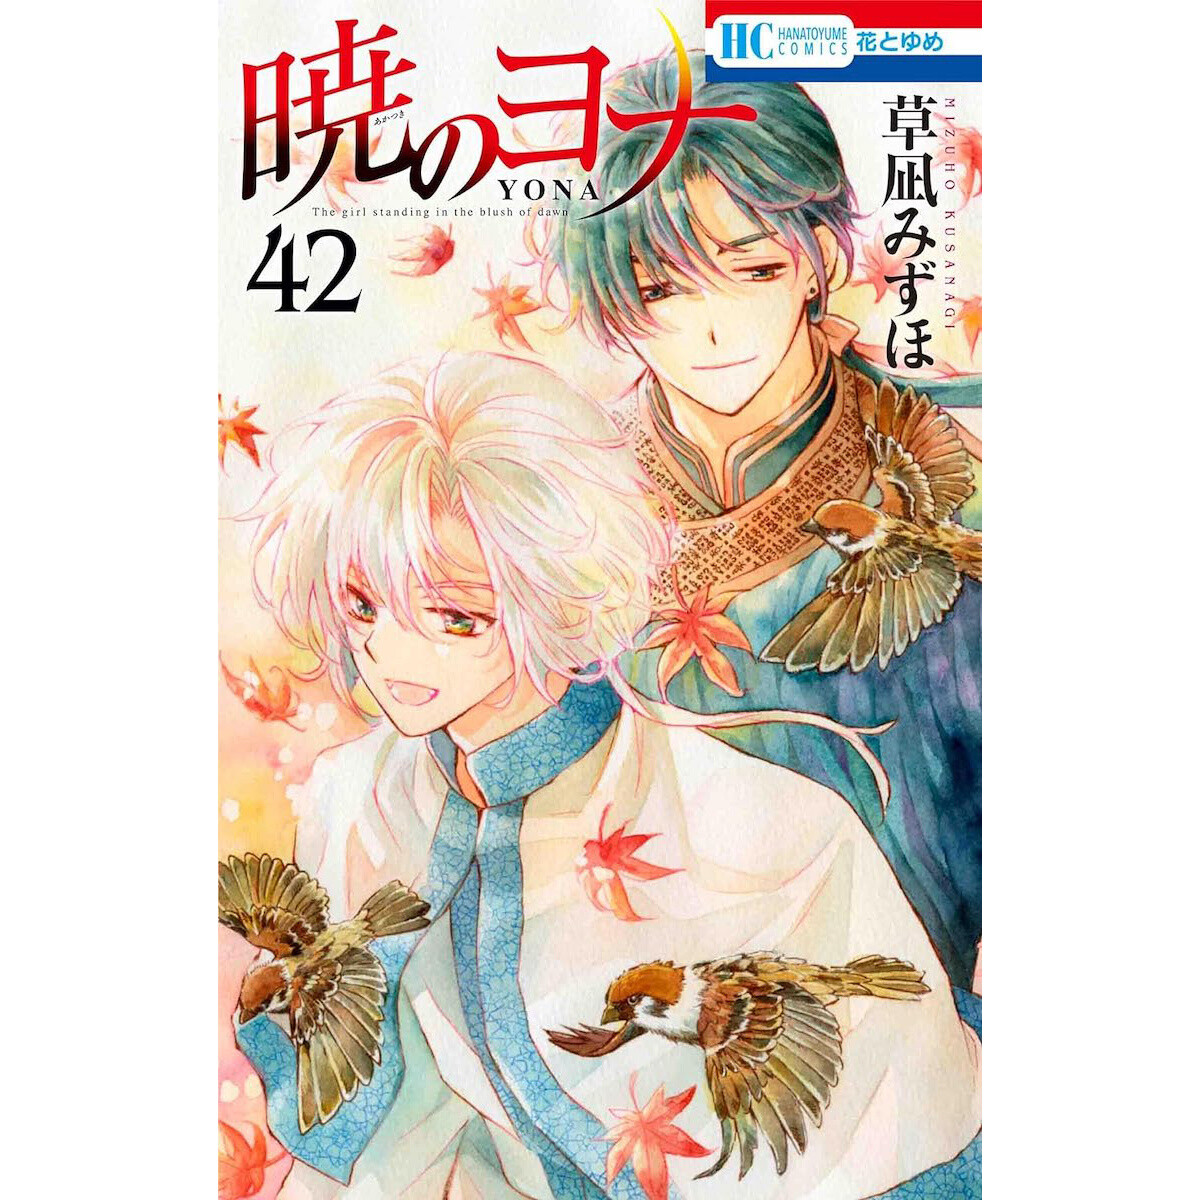 Akatsuki No Yona Manga Online For Free English Version In High-Quality